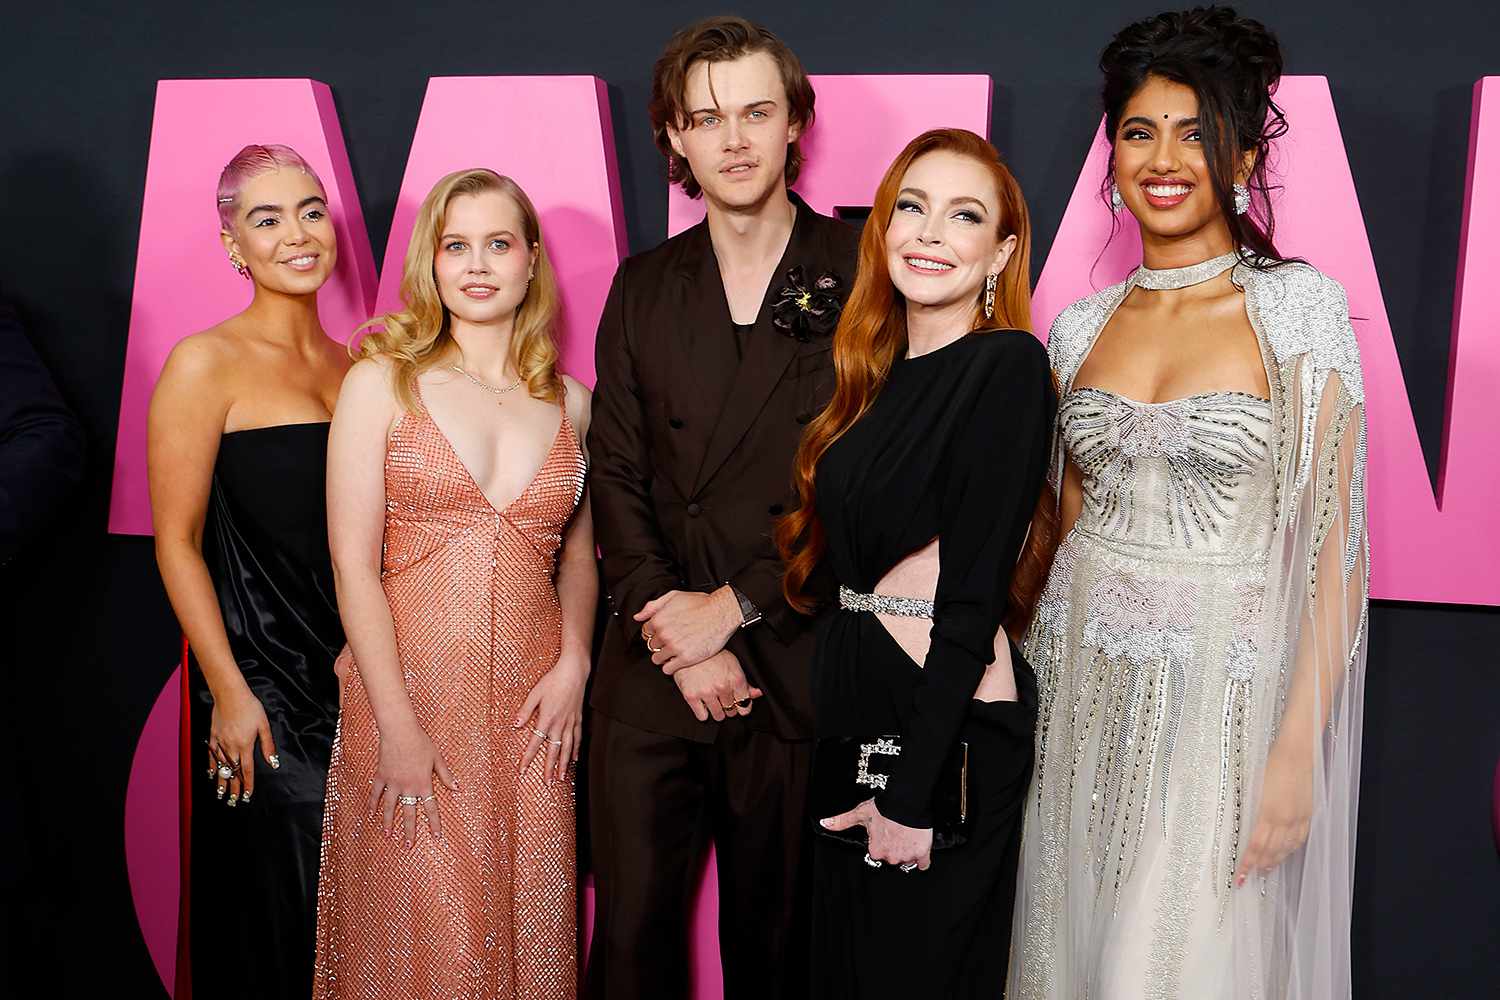 Auli'i Cravalho, Angourie Rice, Christopher Briney, Lindsay Lohan and Avantika Vandanapu attend the "Mean Girls" New York premiere